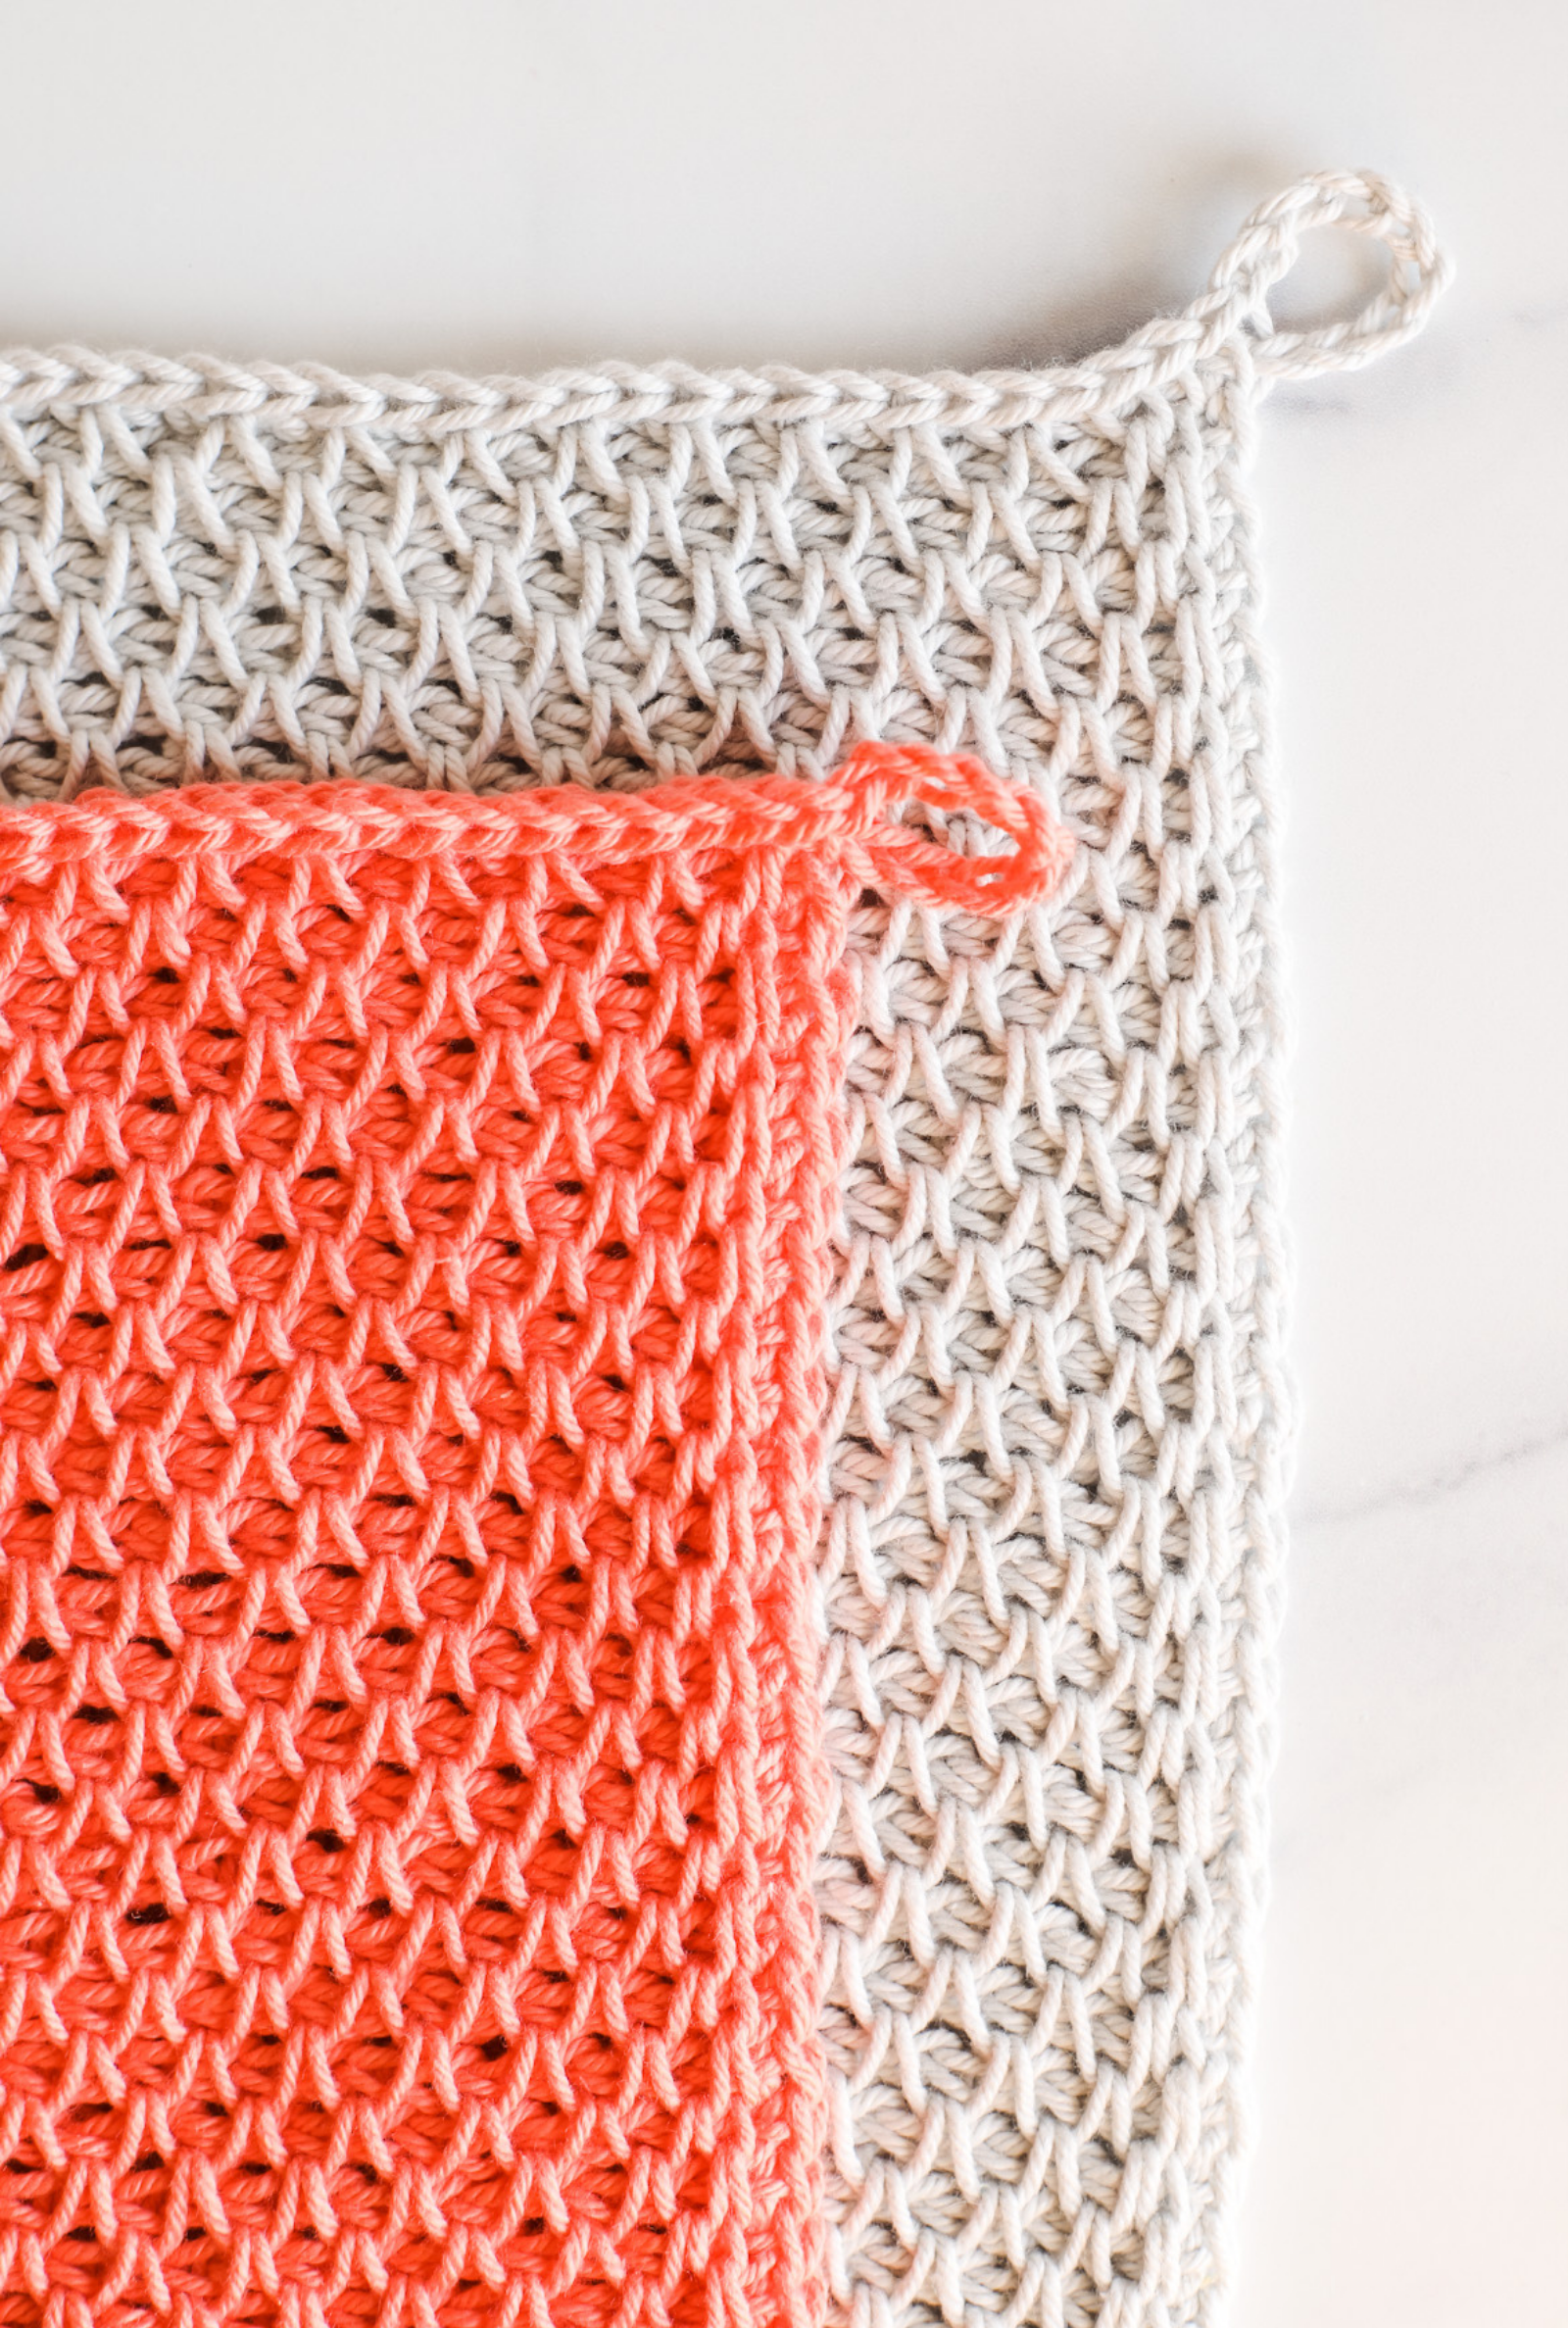 Merci Cloth // Crochet PDF Pattern